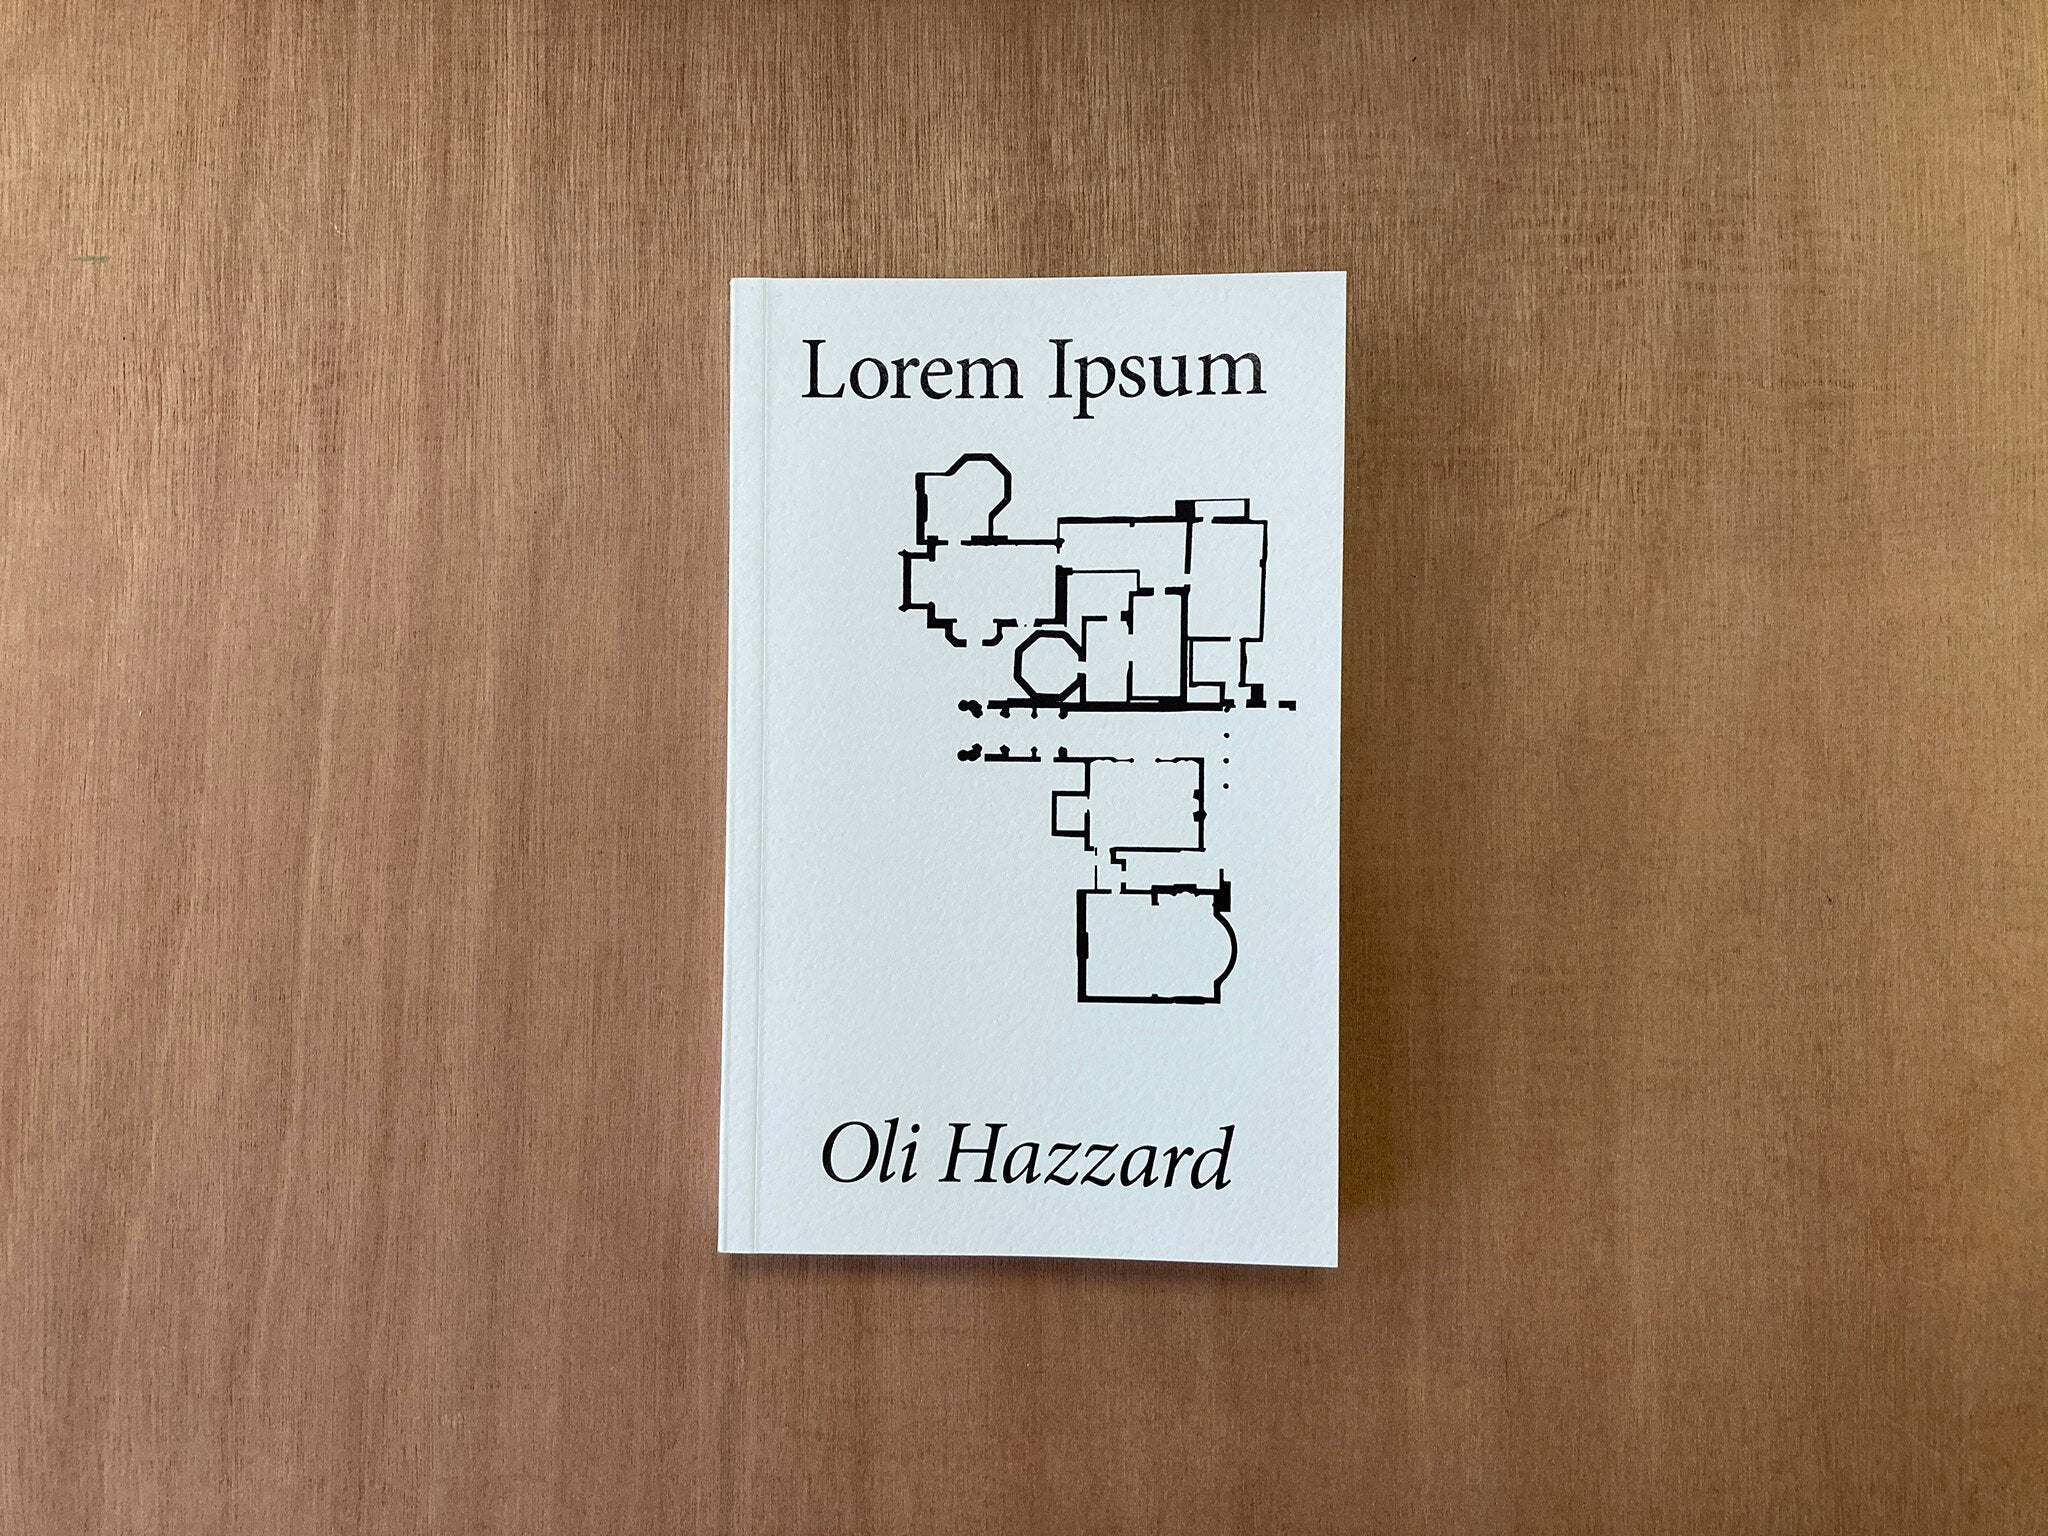 LOREM IPSUM by Oli Hazzard